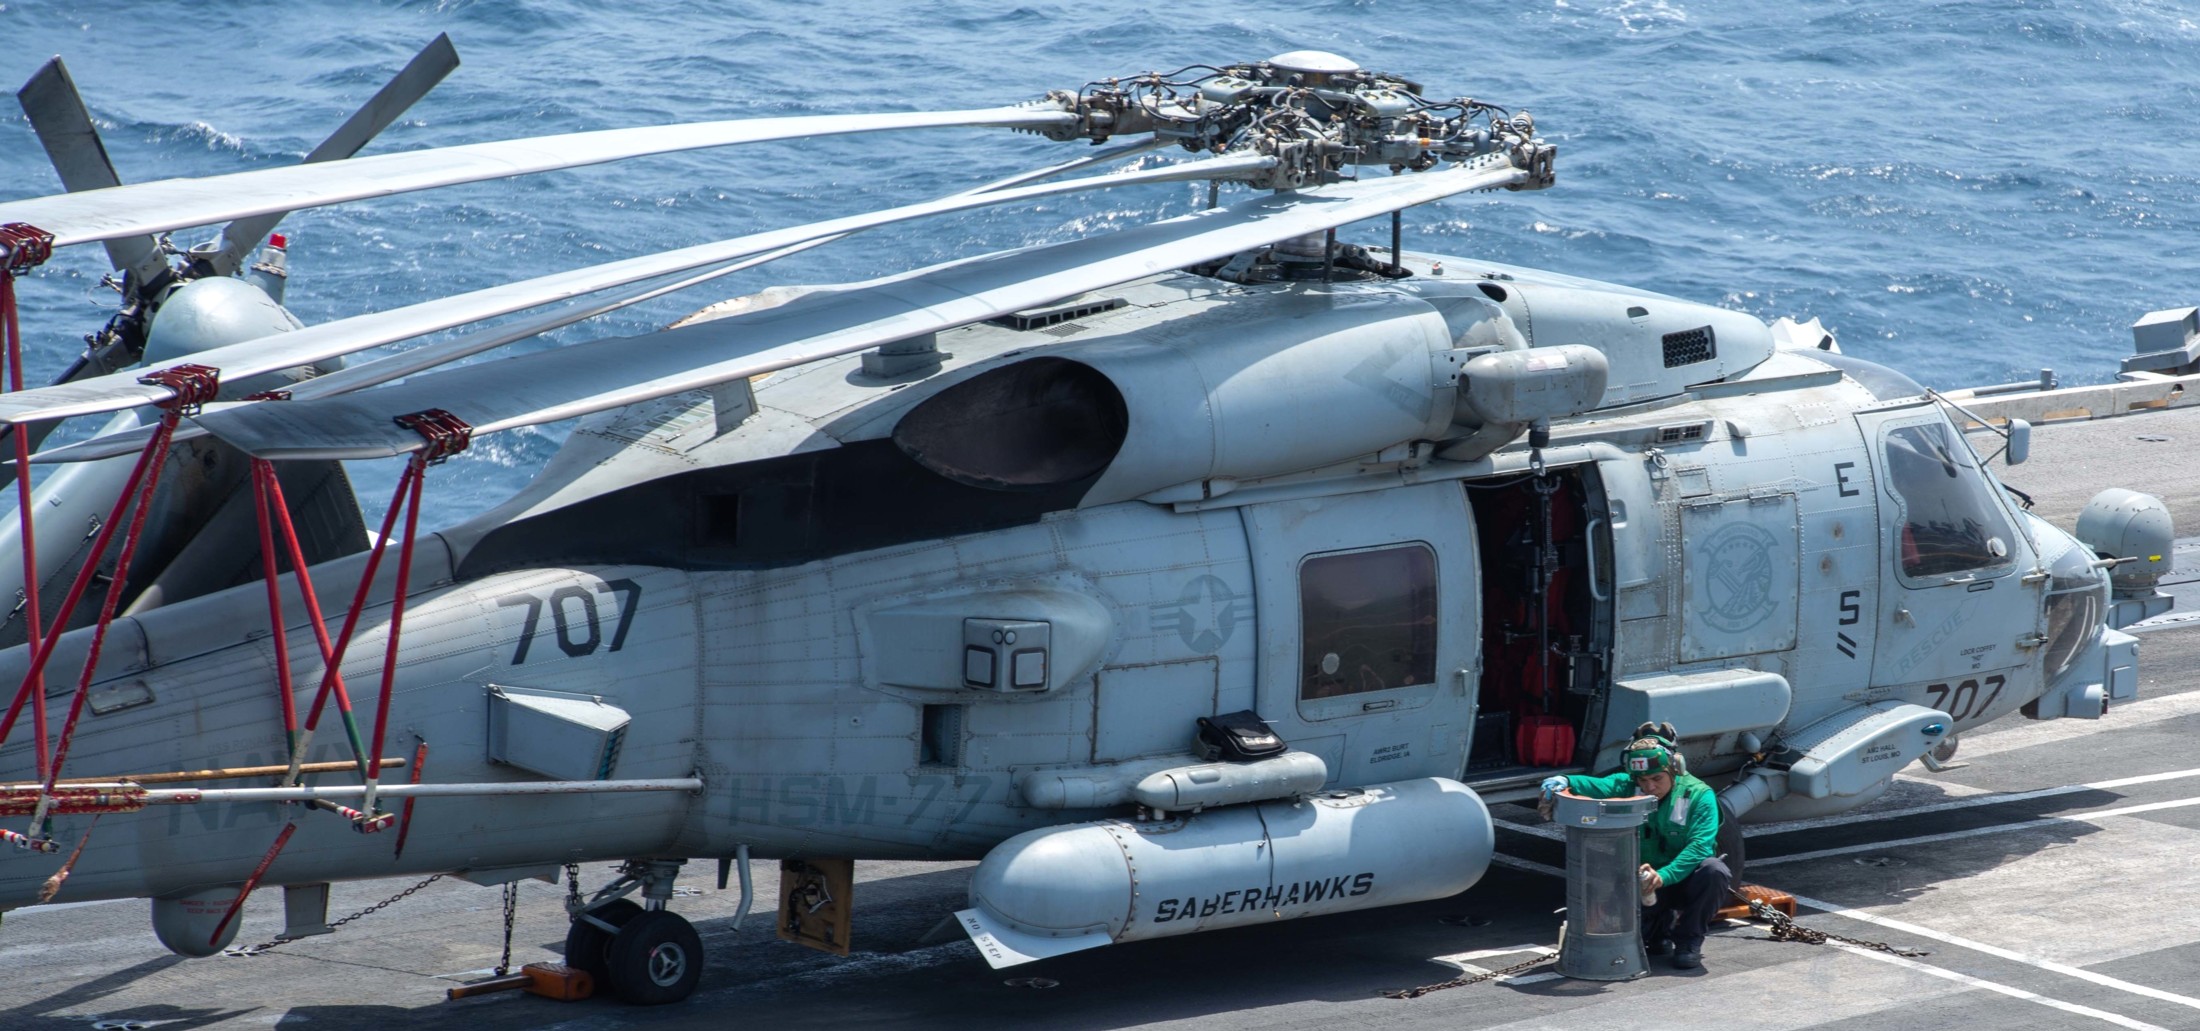 hsm-77 saberhawks helicopter maritime strike squadron mh-60r seahawk cvw-5 cvn-76 uss ronald reagan 92